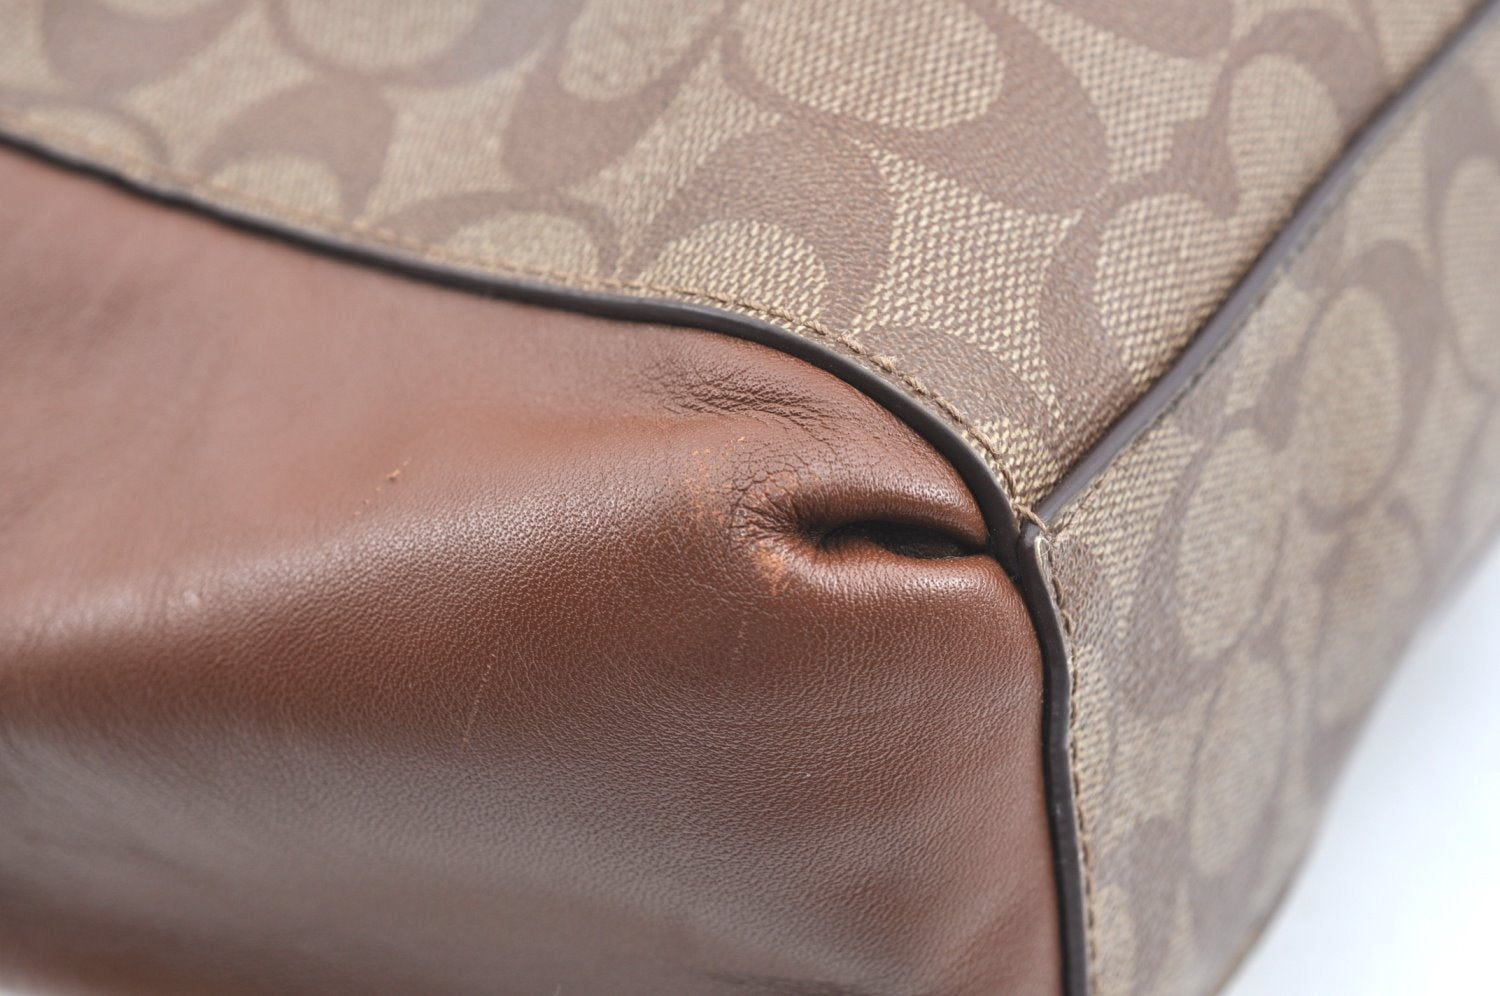 Authentic COACH Signature 2Way Shoulder Tote Bag PVC Leather F58305 Brown K5914